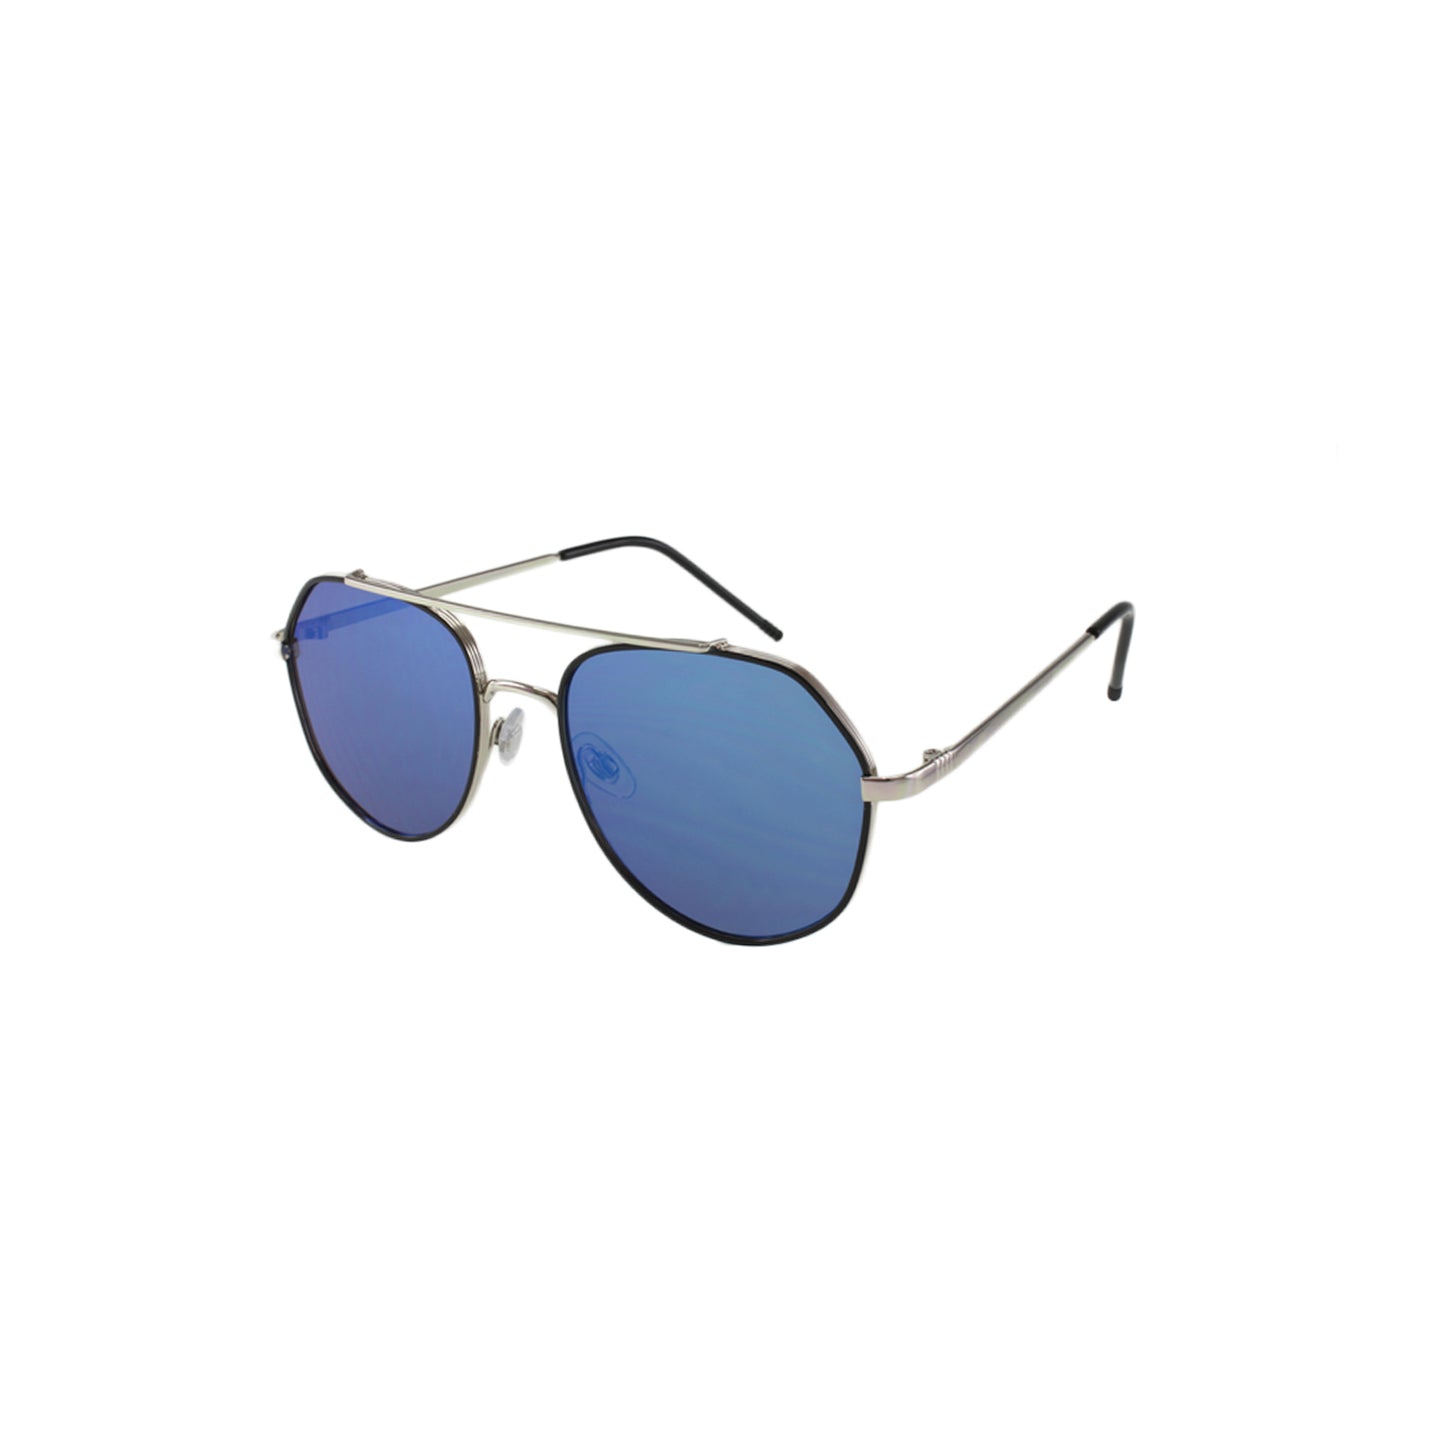 Jase New York Biltmore Sunglasses in Blue